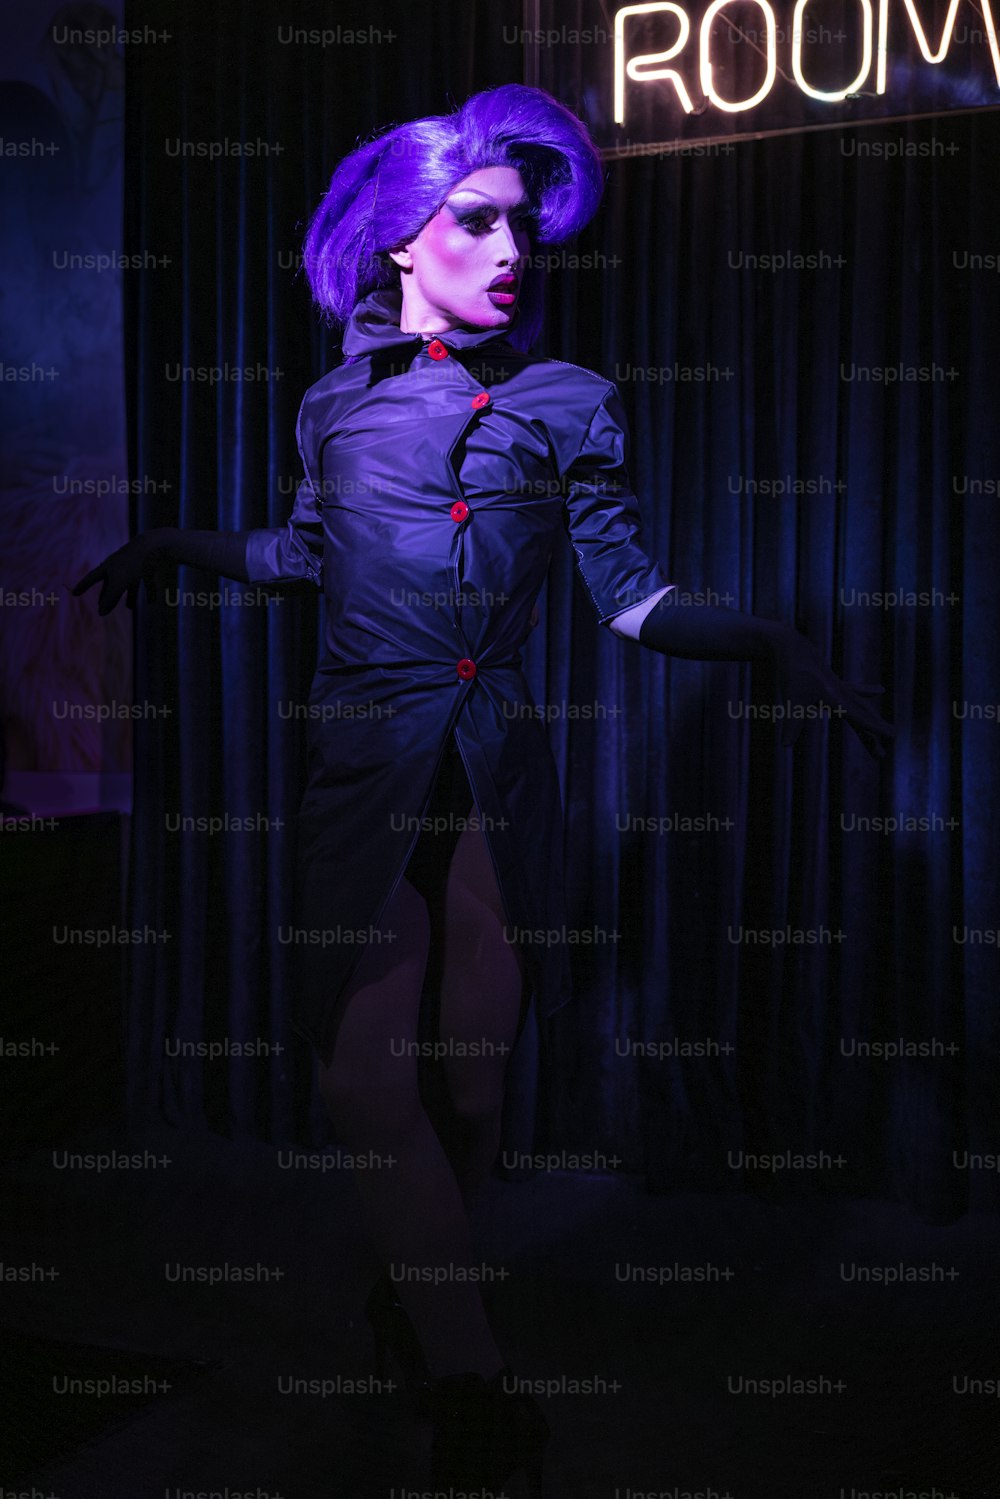 Una donna con i capelli viola è in piedi in una stanza buia